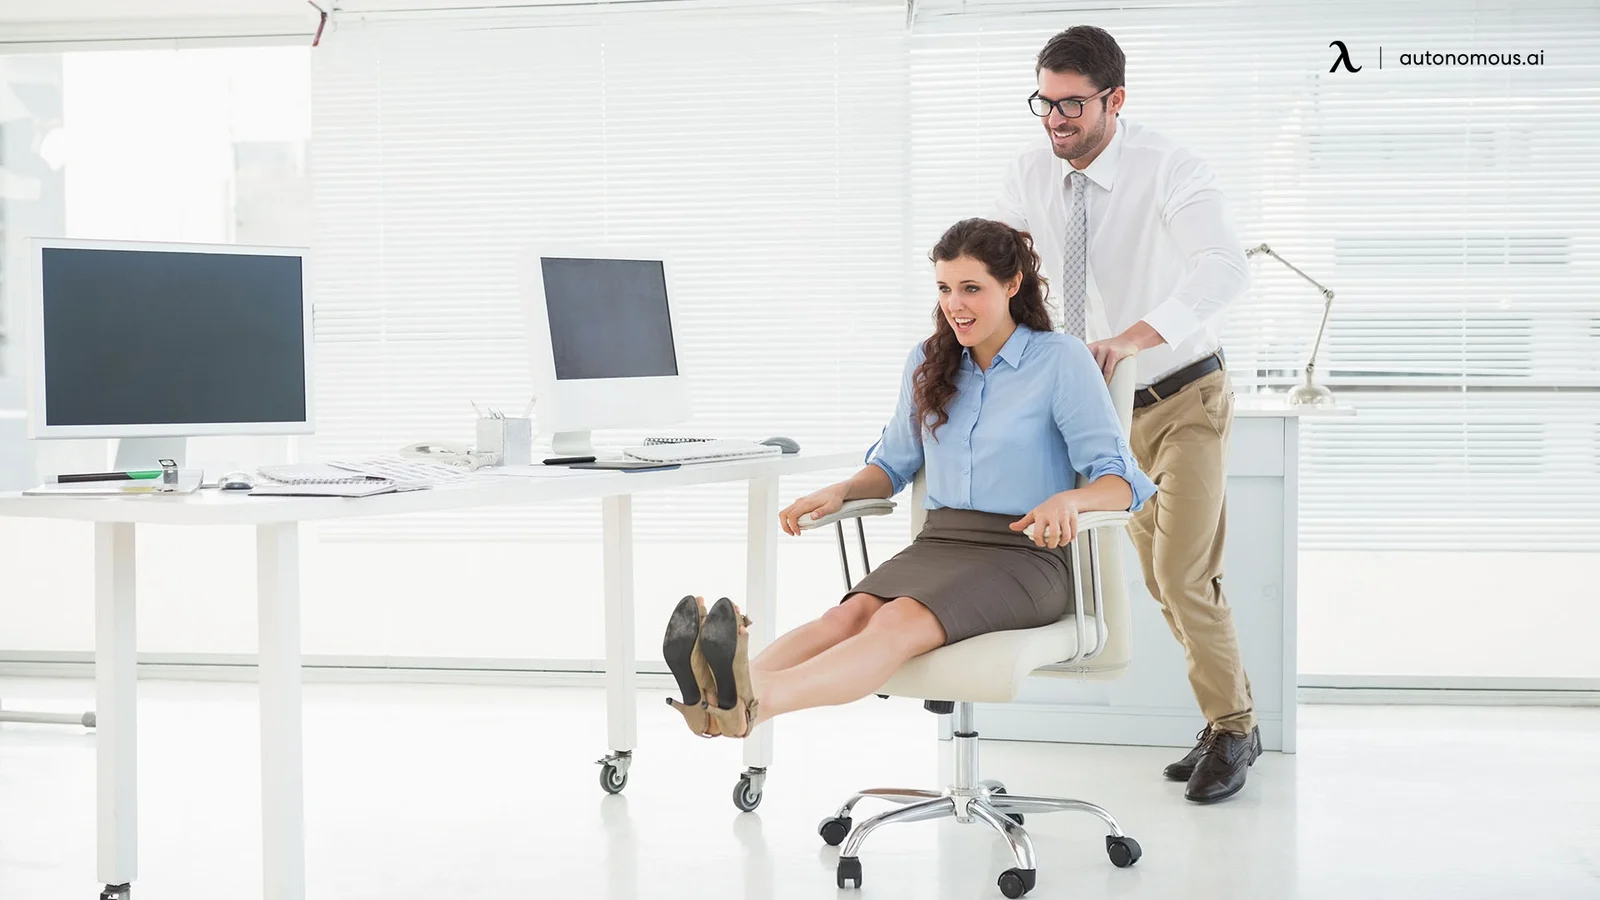 Misolant Ergonomic Office Chair with Footrest, Ergonomic Desk